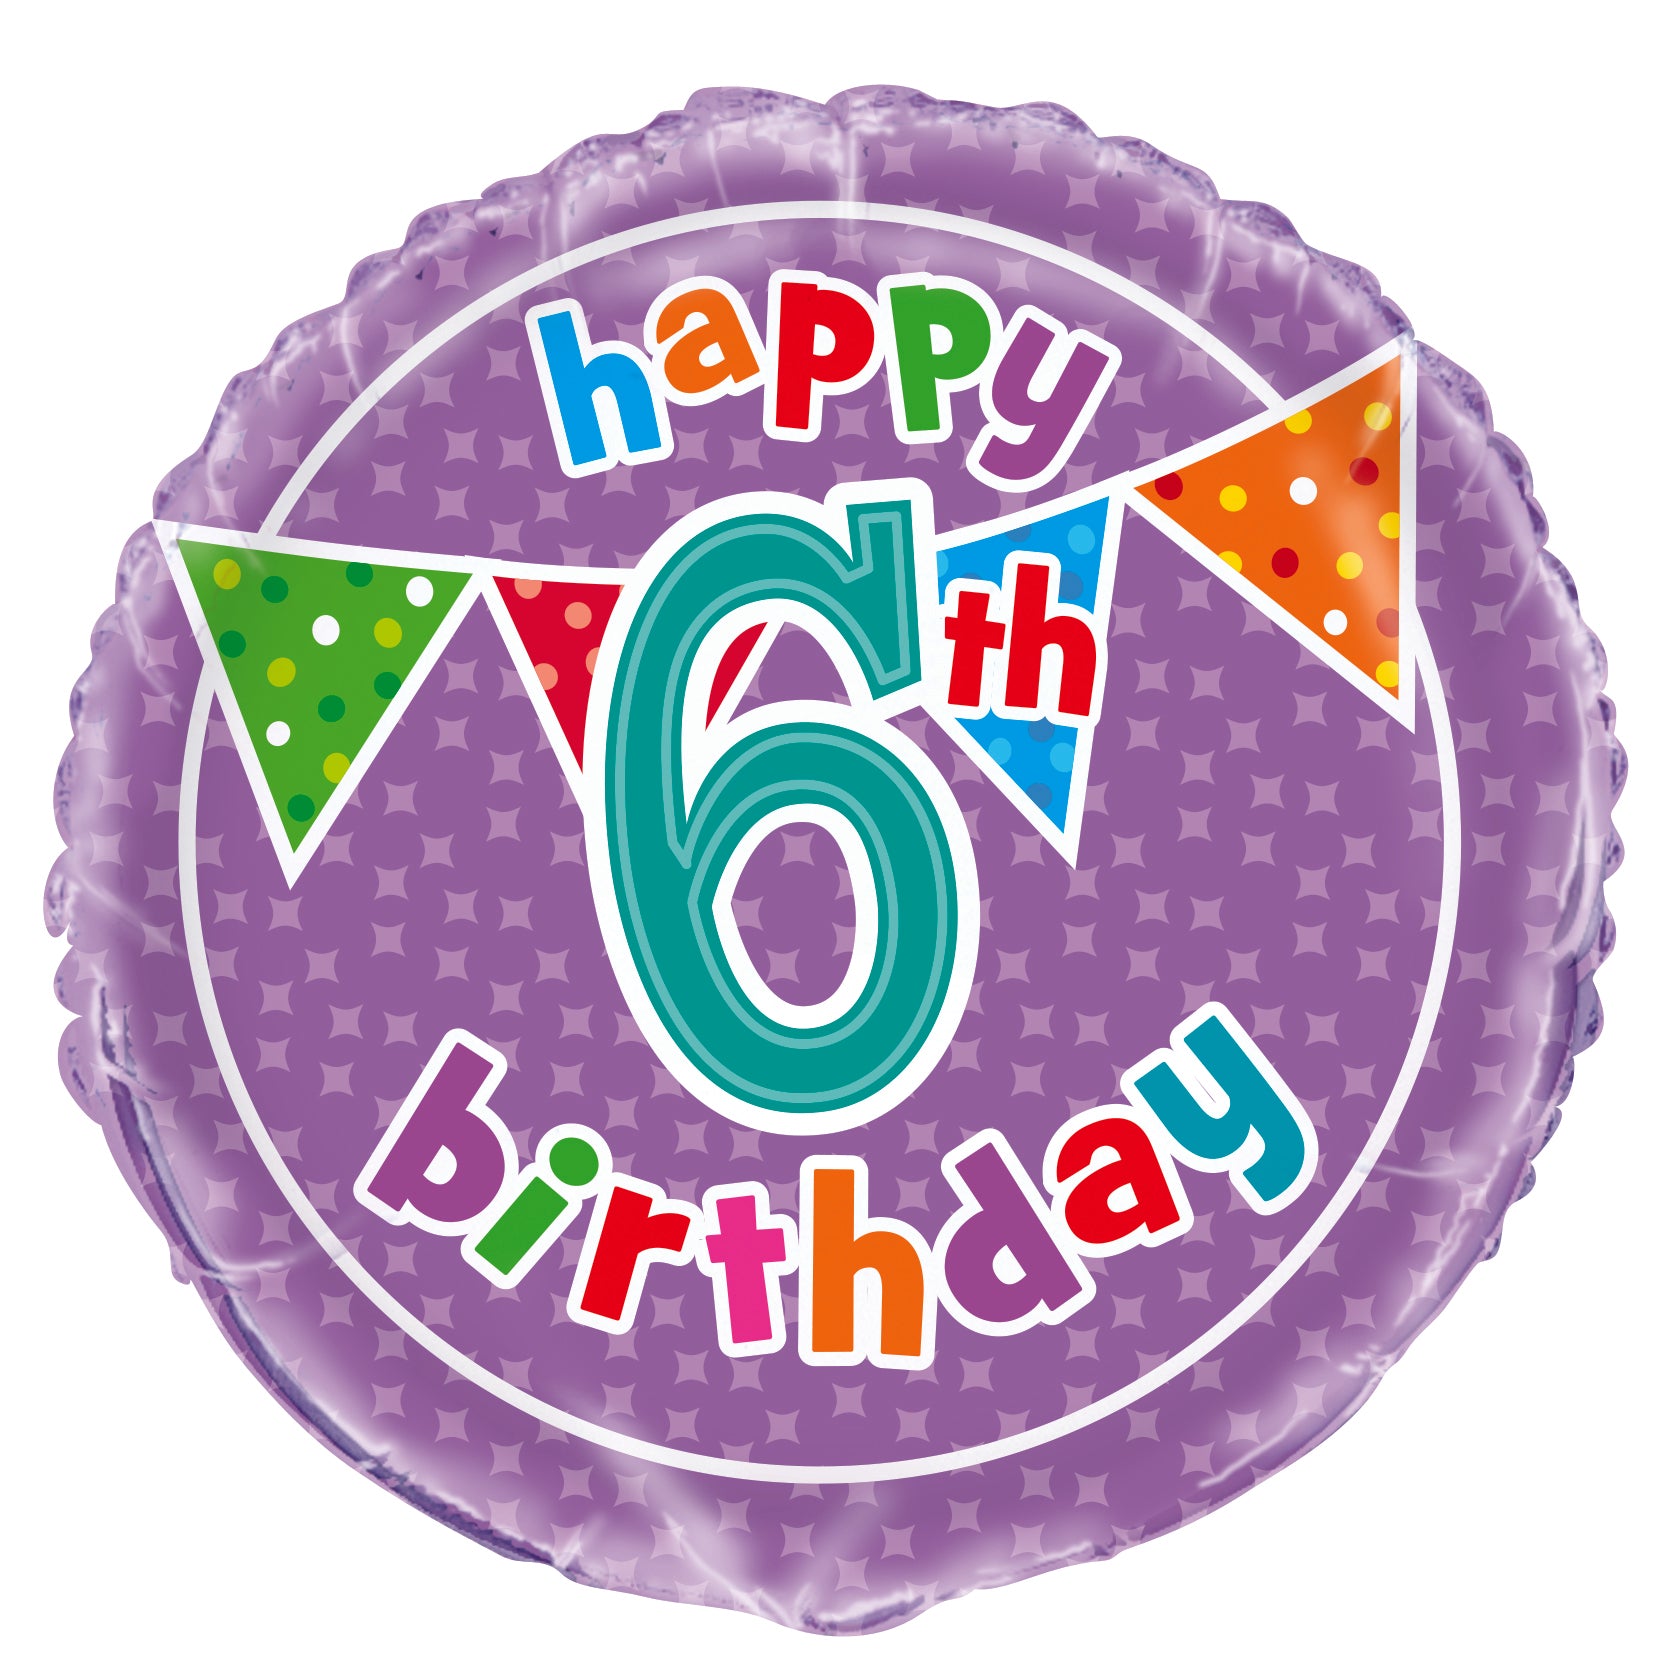 Polka Dot Happy 6th Birthday 45cm Foil Balloon Default Title